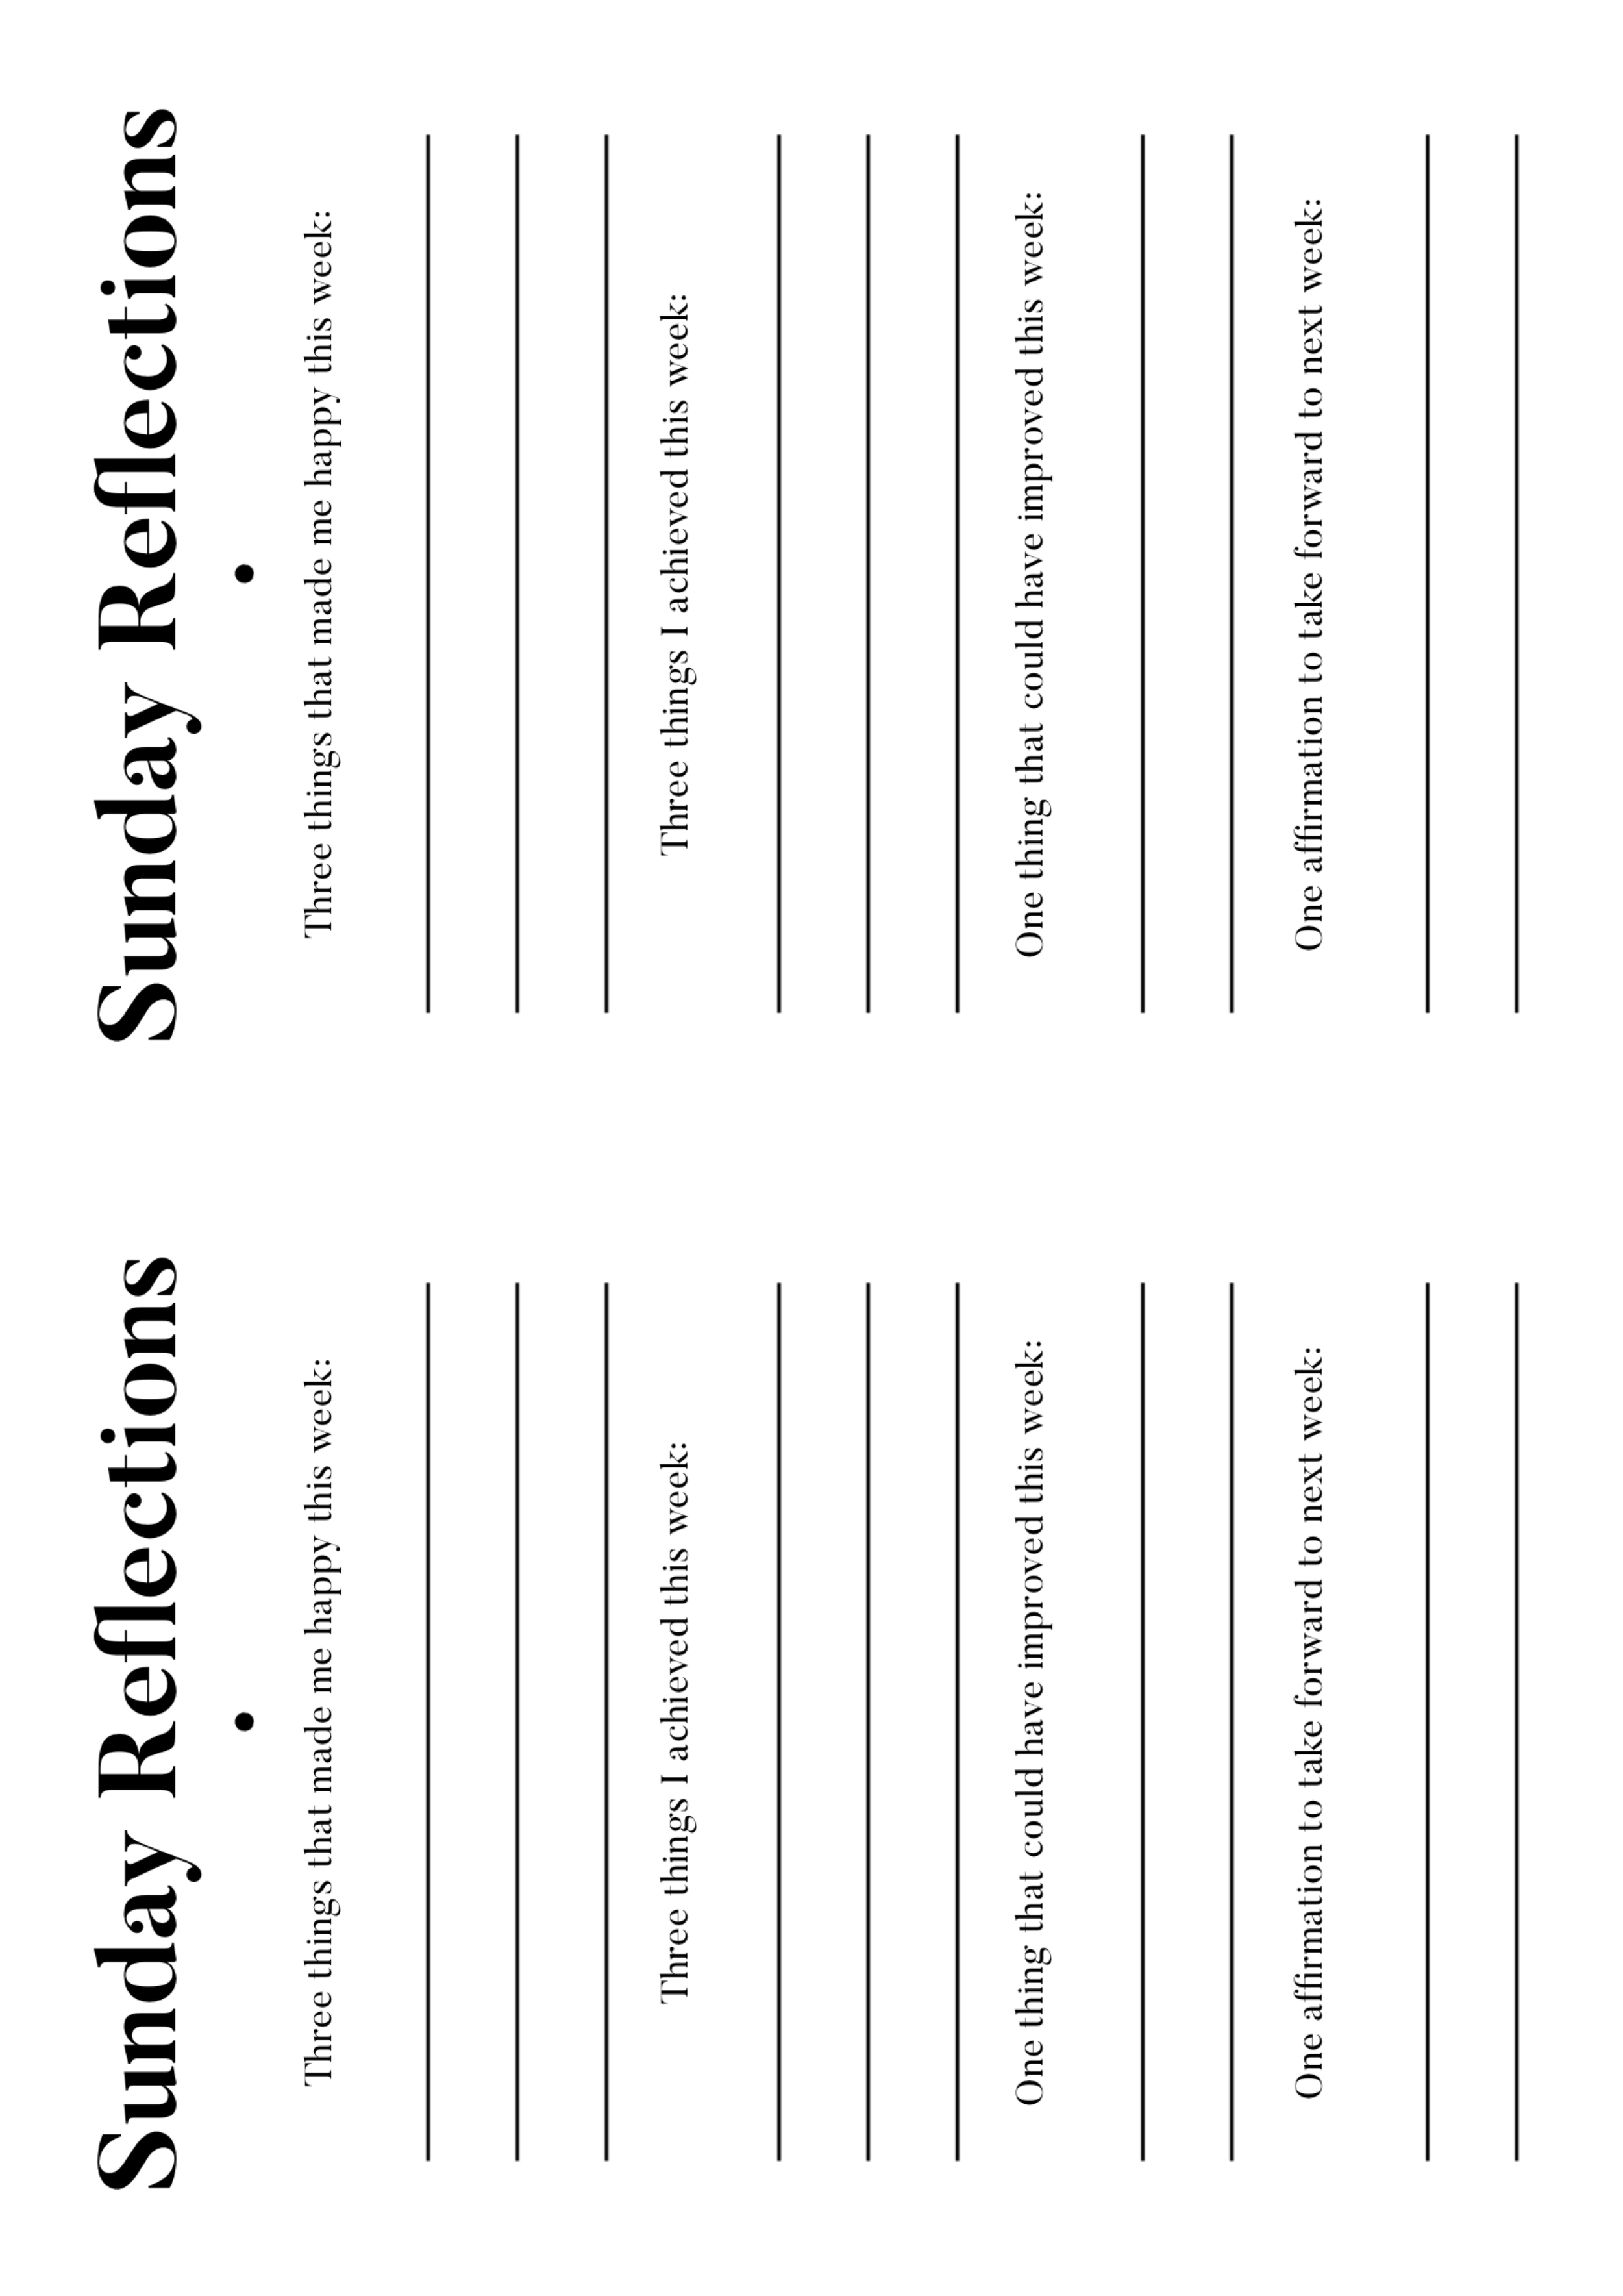 PDF Sunday Reflections Printable Gratitude Intention Journalling Tool